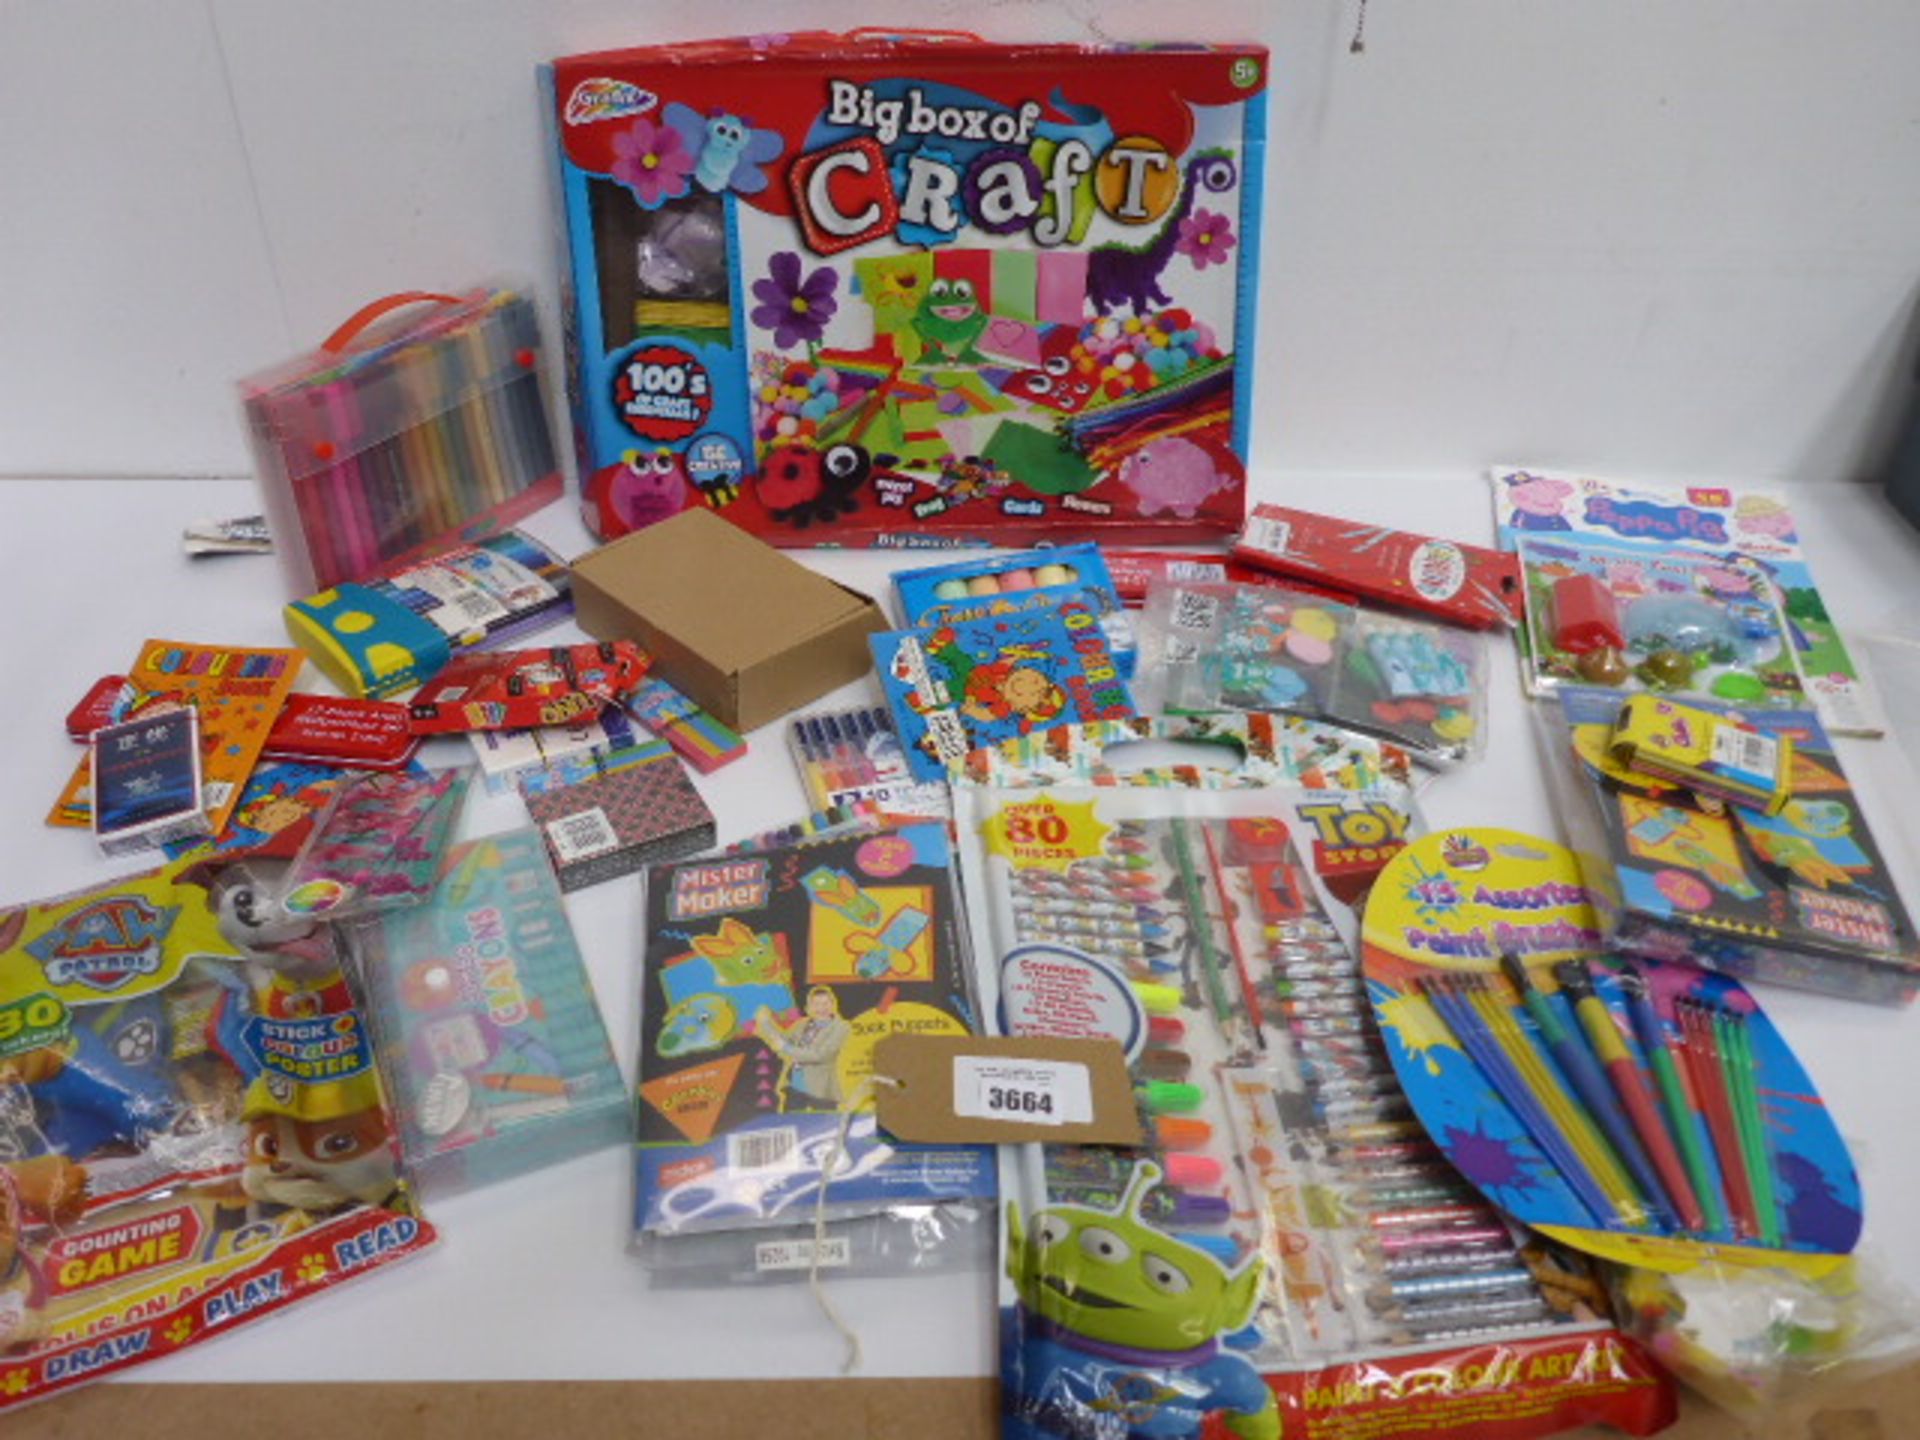 Craft packs, colouring pens, pencils, chalk, card games, activity books etc